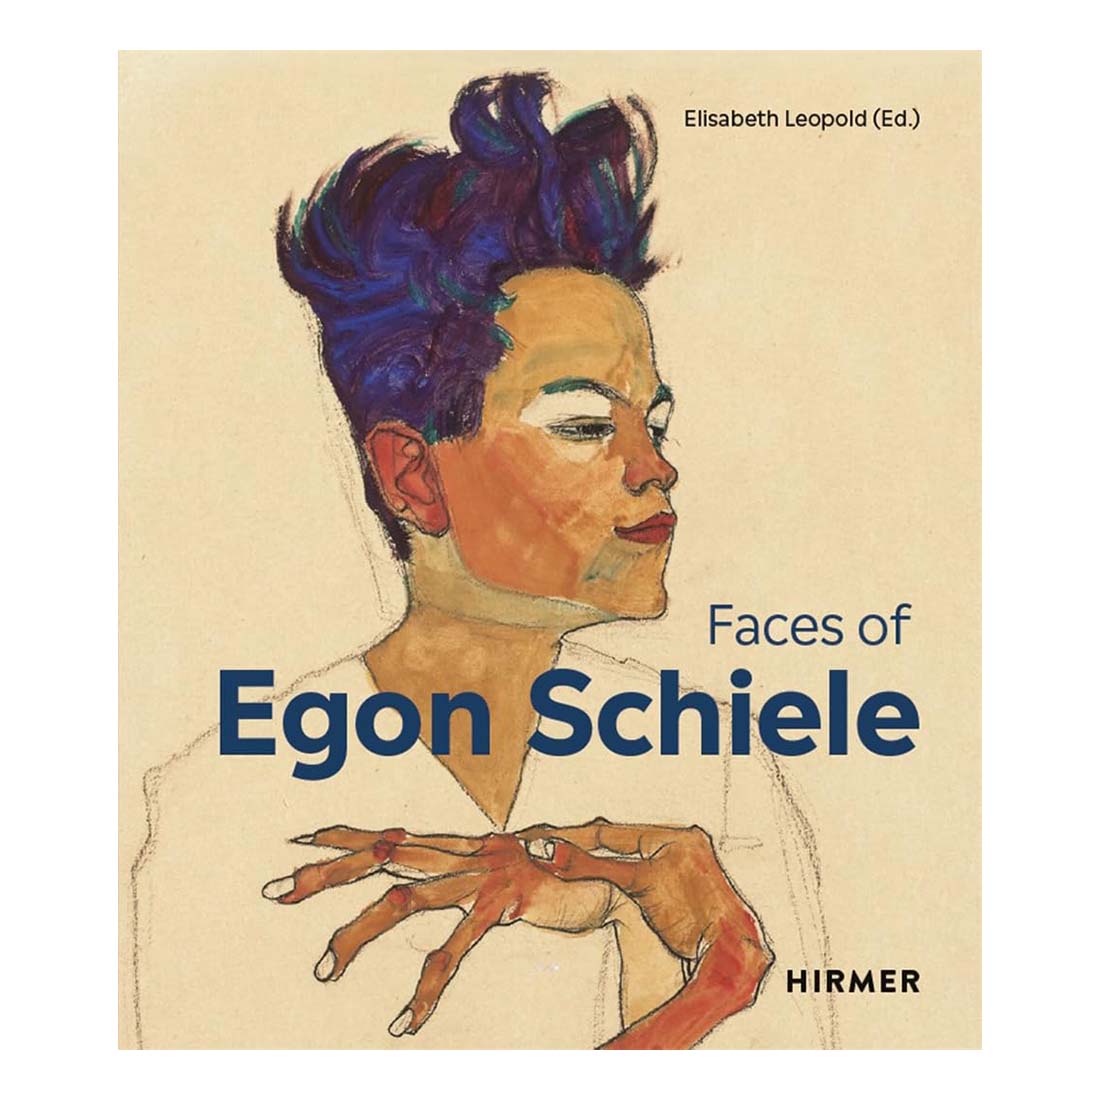 The Faces of Egon Schiele: Self-Portraits